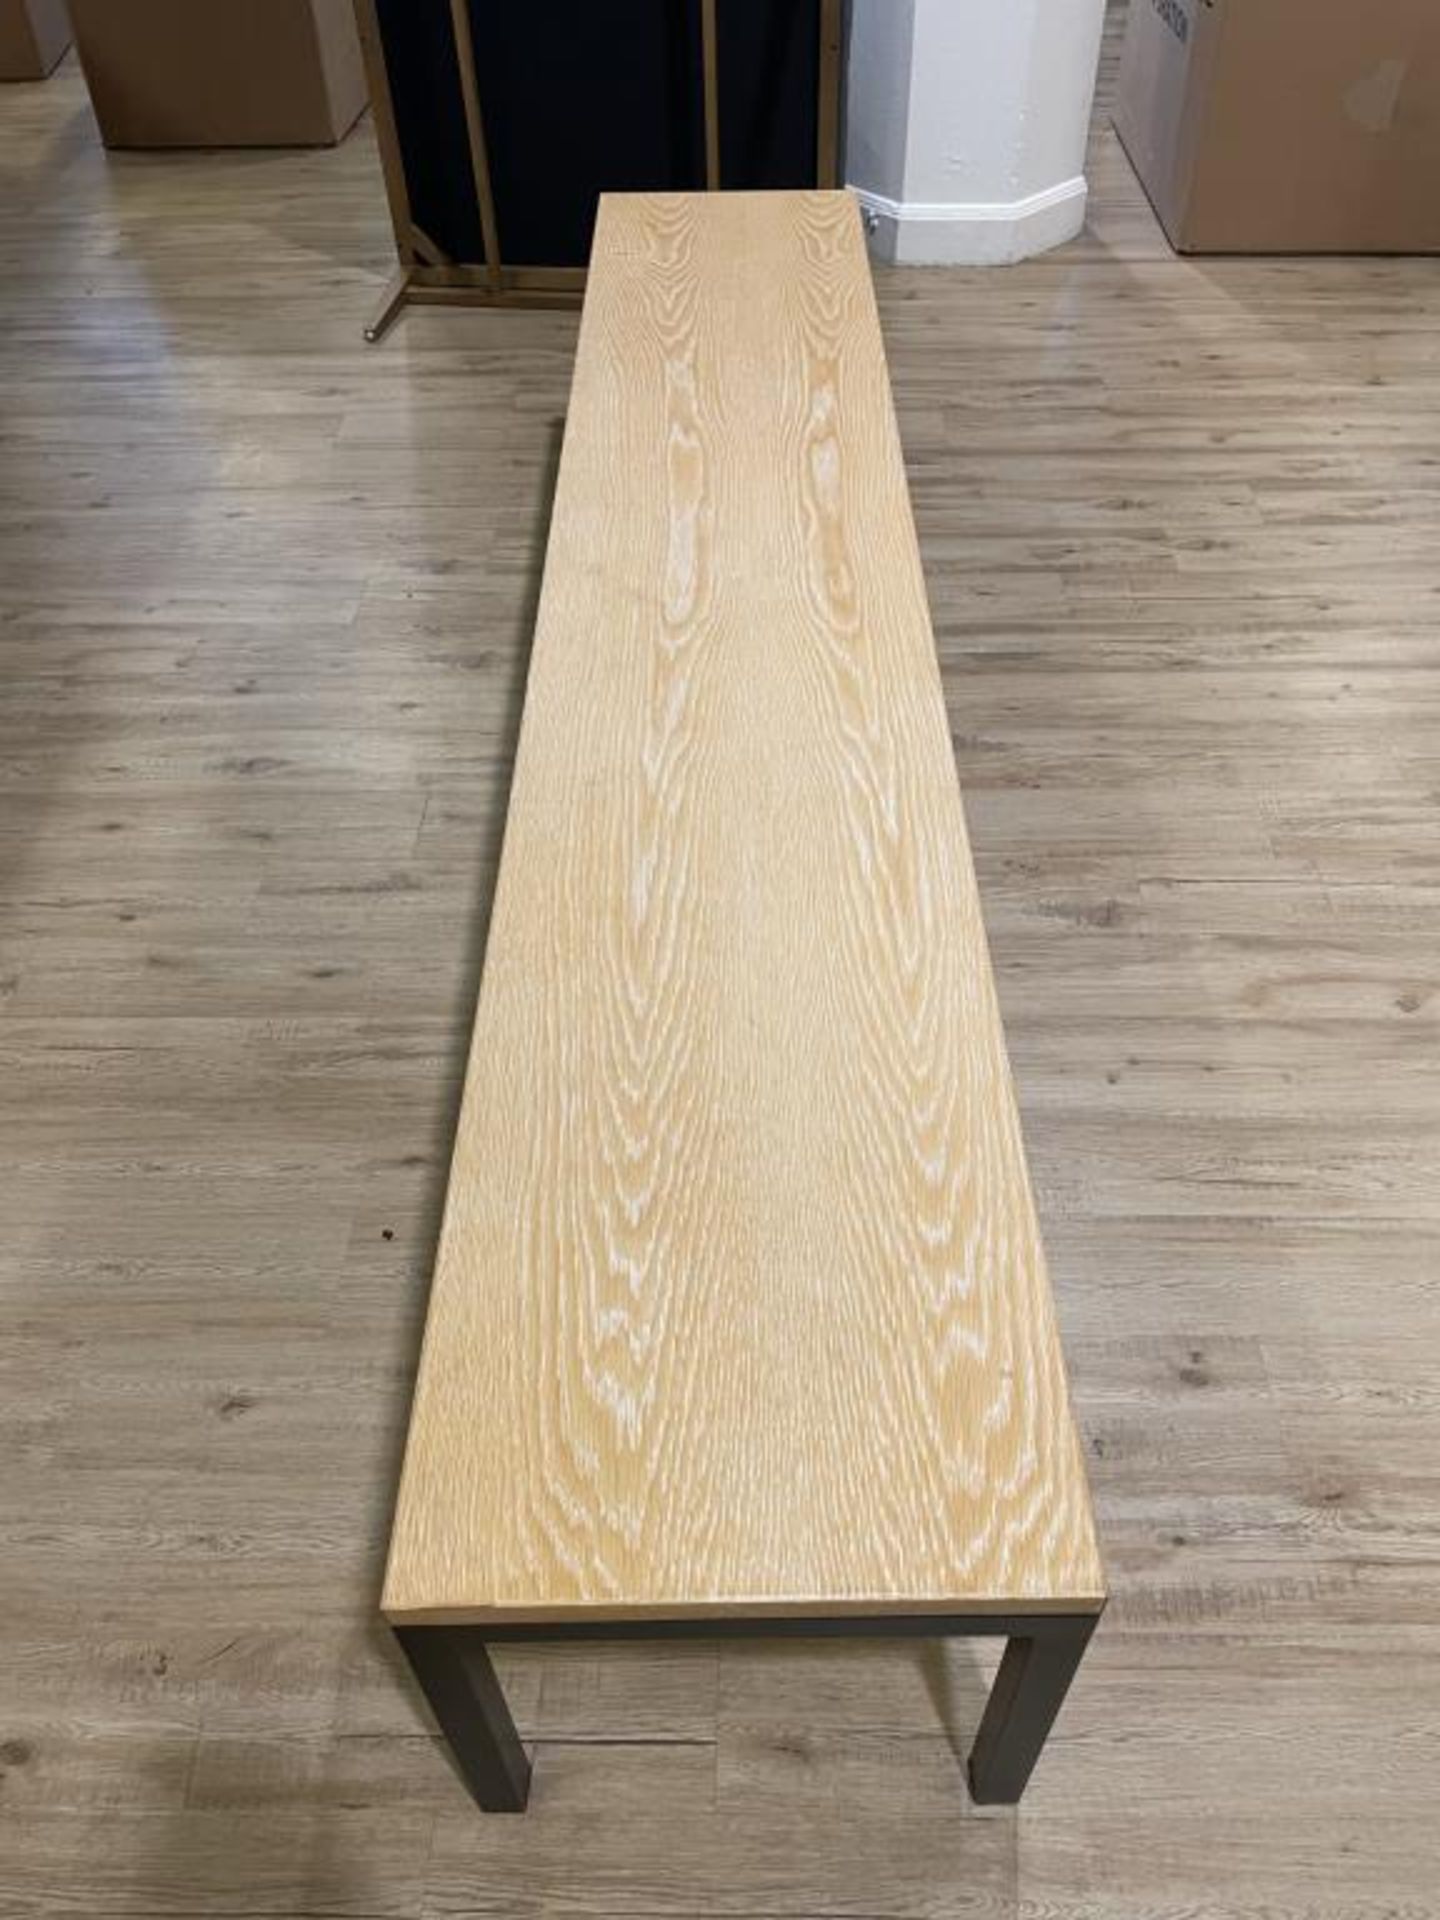 OHIO Design Coffee Table / Bench 96"L - Image 2 of 3